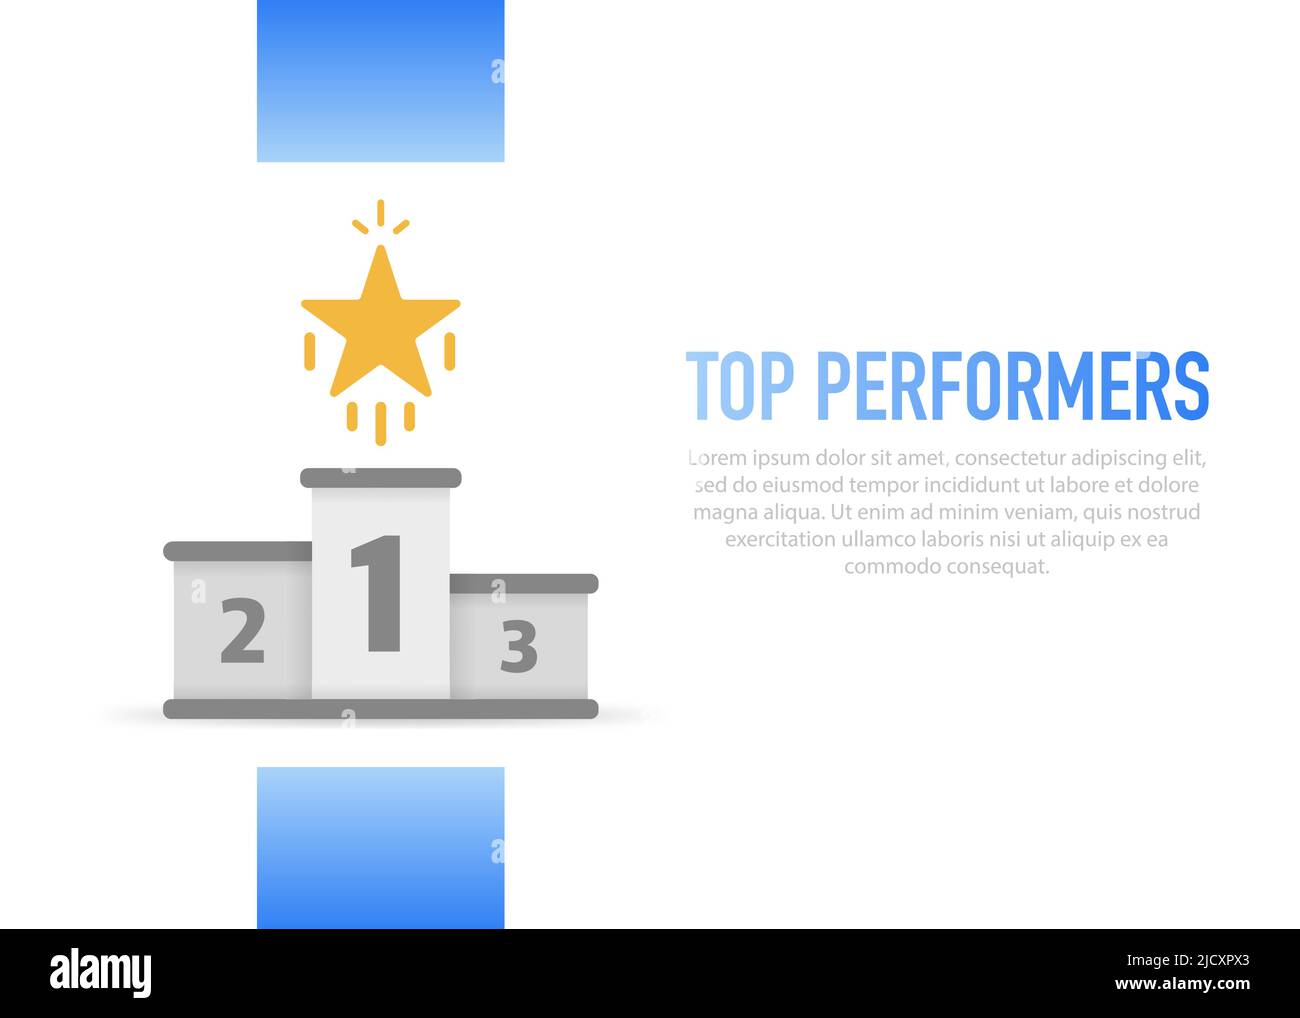 Top Performers. Website template designs. Vector illustration Stock Vector